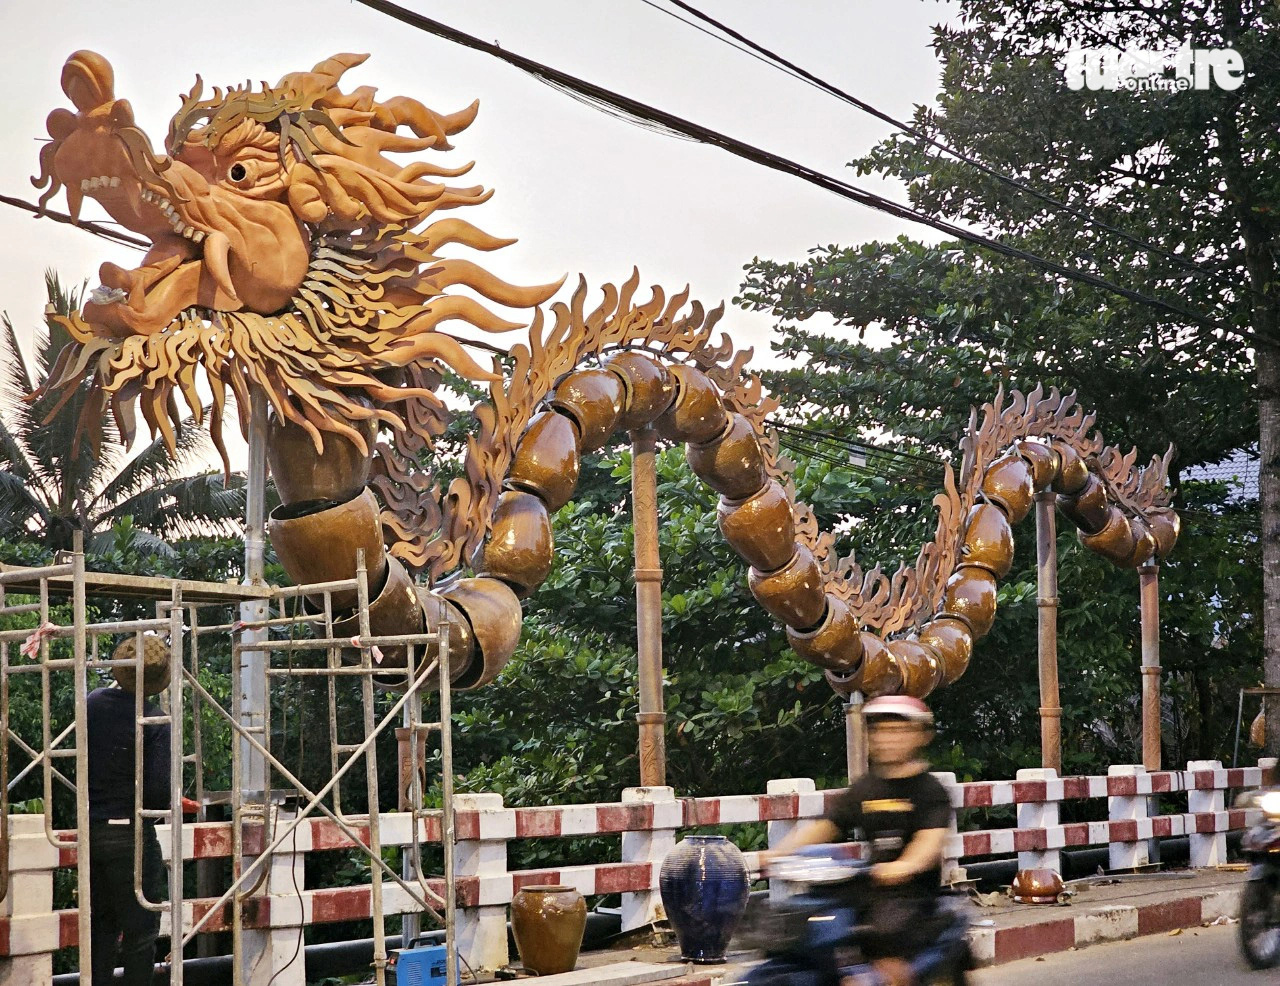 Sourthern Vietnam craft village builds massive ceramic dragon sculptures for Tet